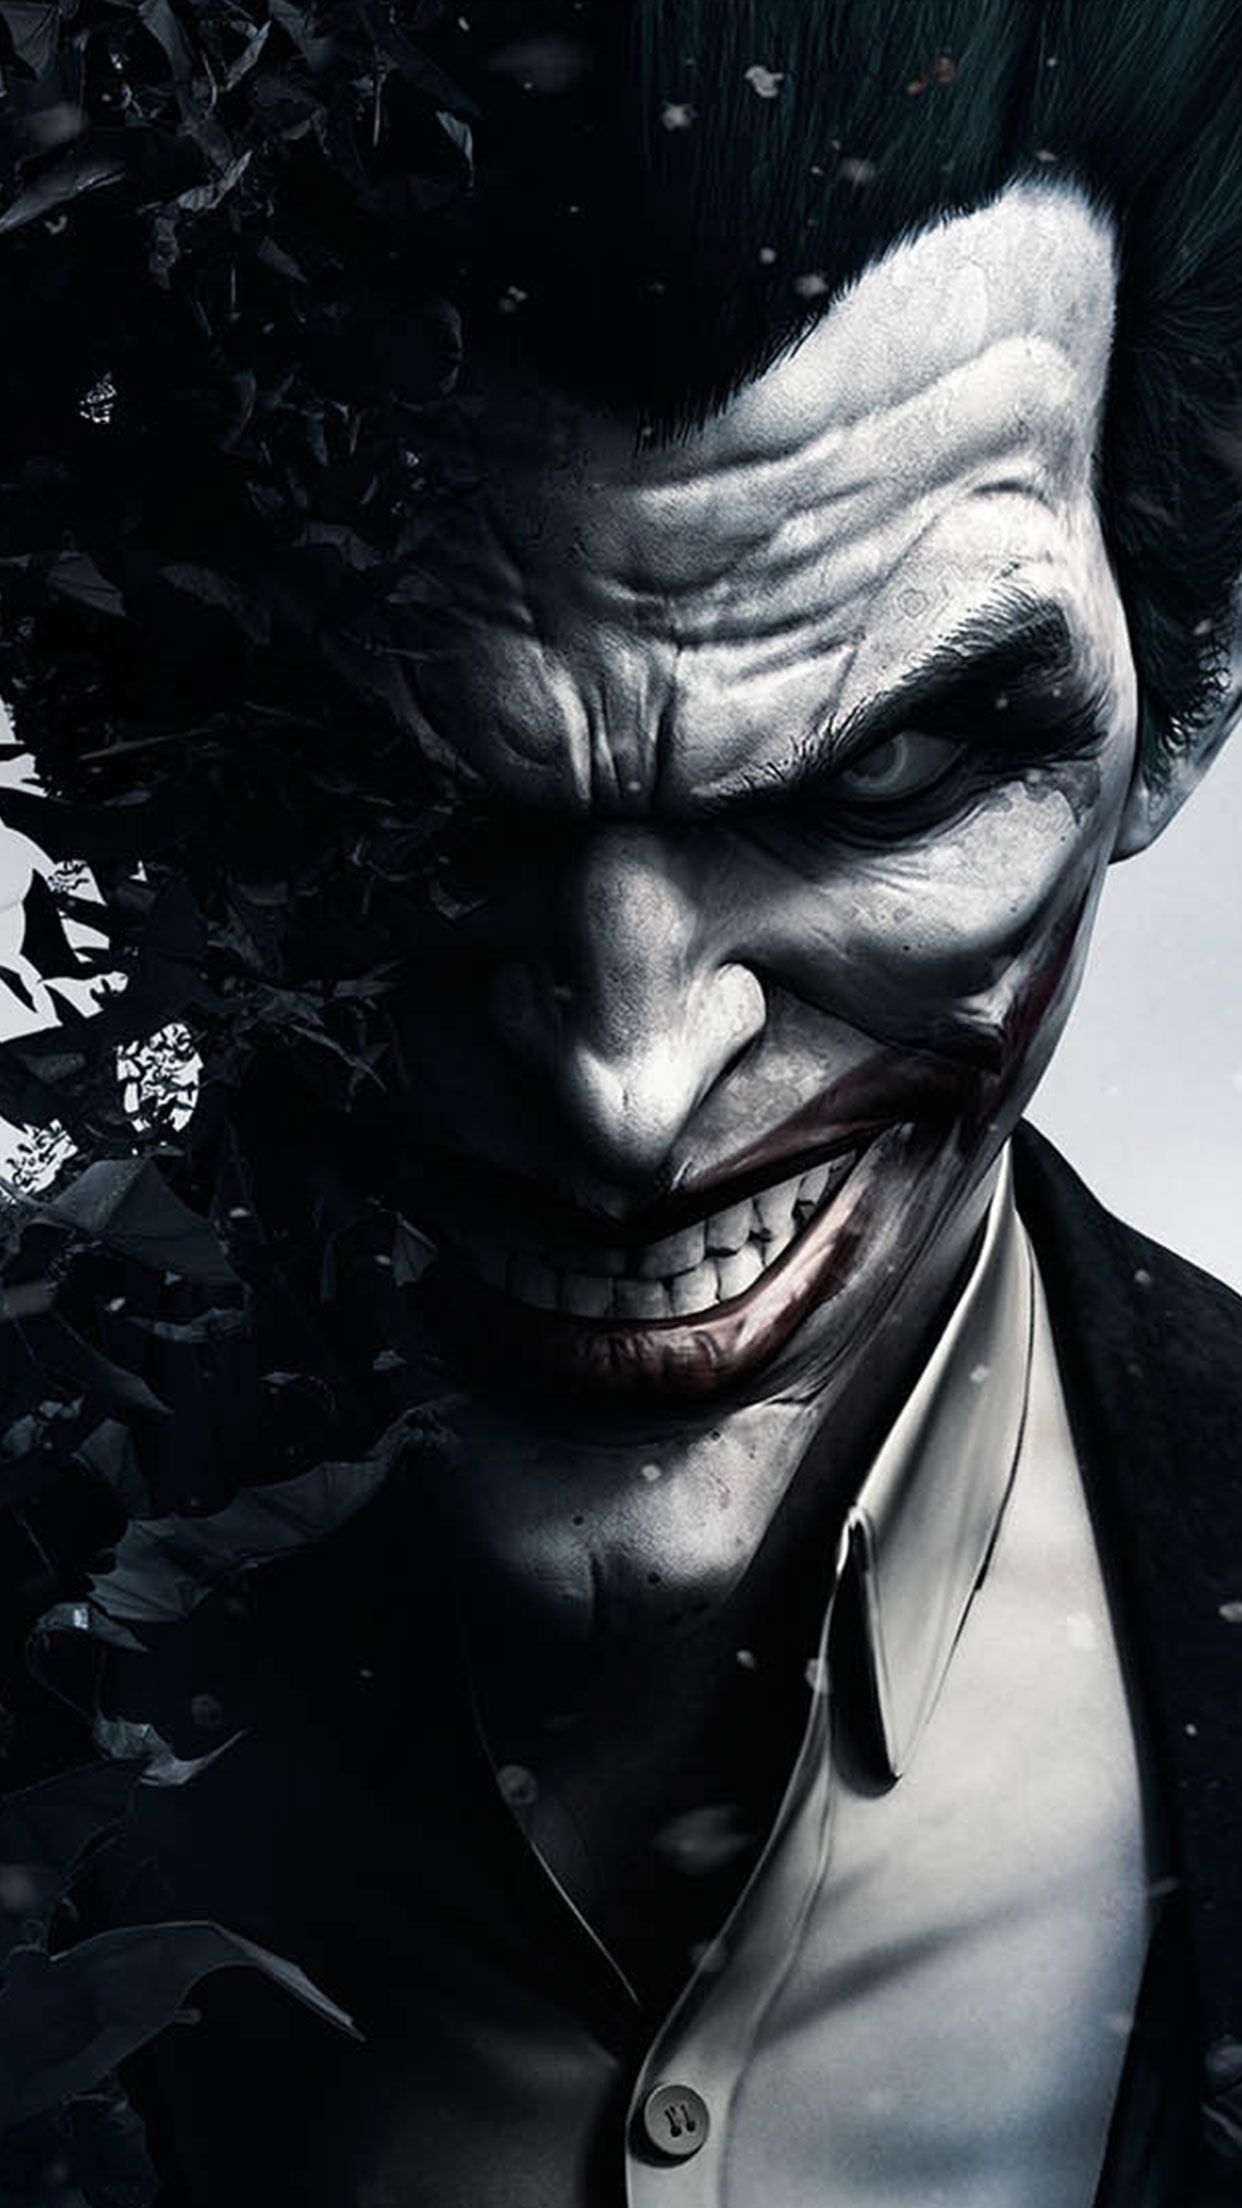 Comics Joker 4k Ultra HD Wallpaper by Vinz El Tabanas